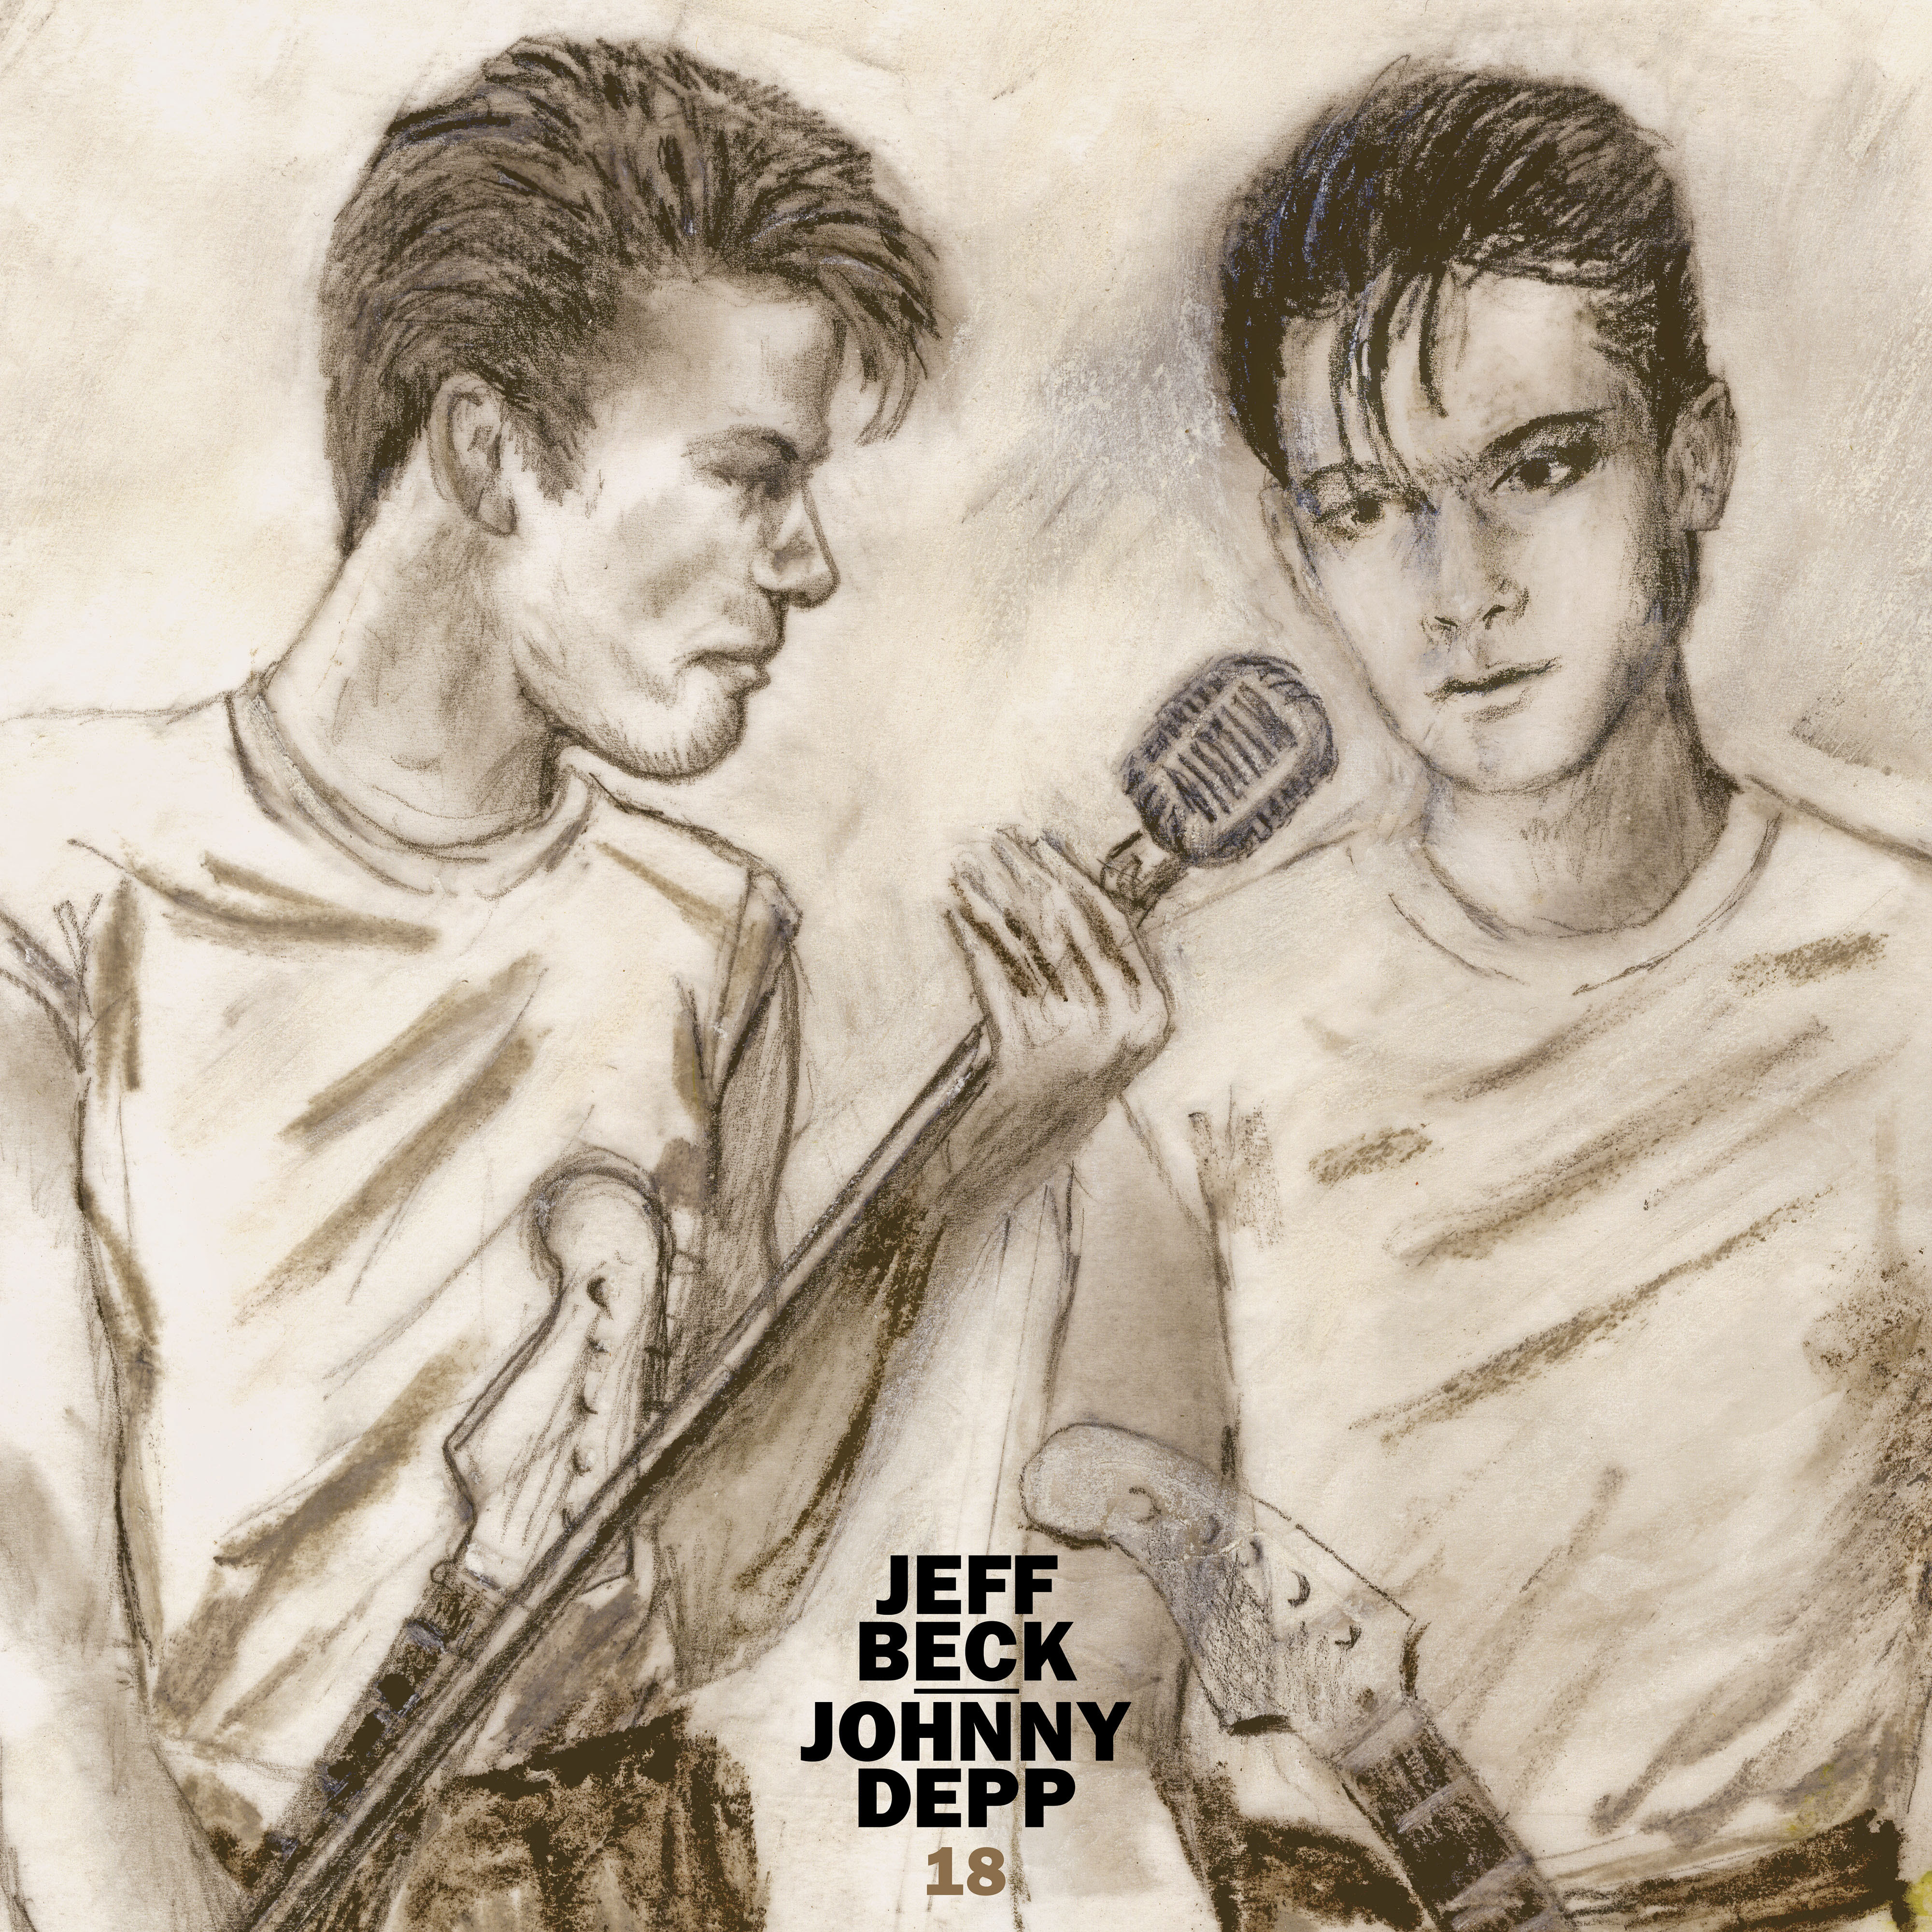 B&igrave;a album "18" của&nbsp;Johnny Depp v&agrave;&nbsp;Jeff Beck.